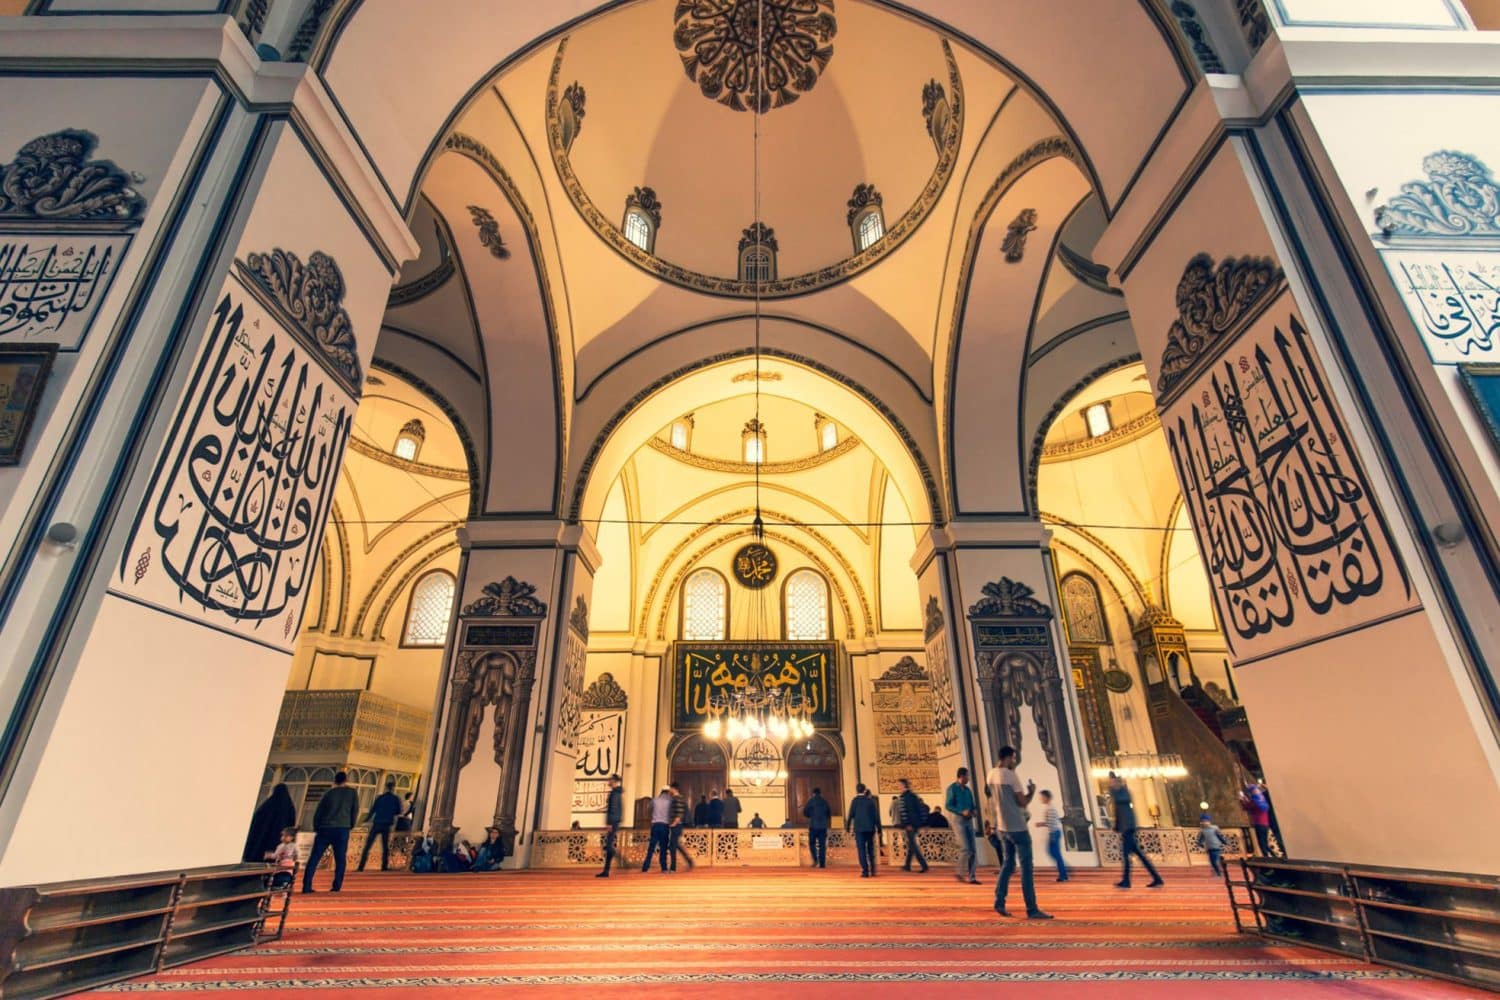 Tour Photos: Internal view of Bursa Grand Mosque